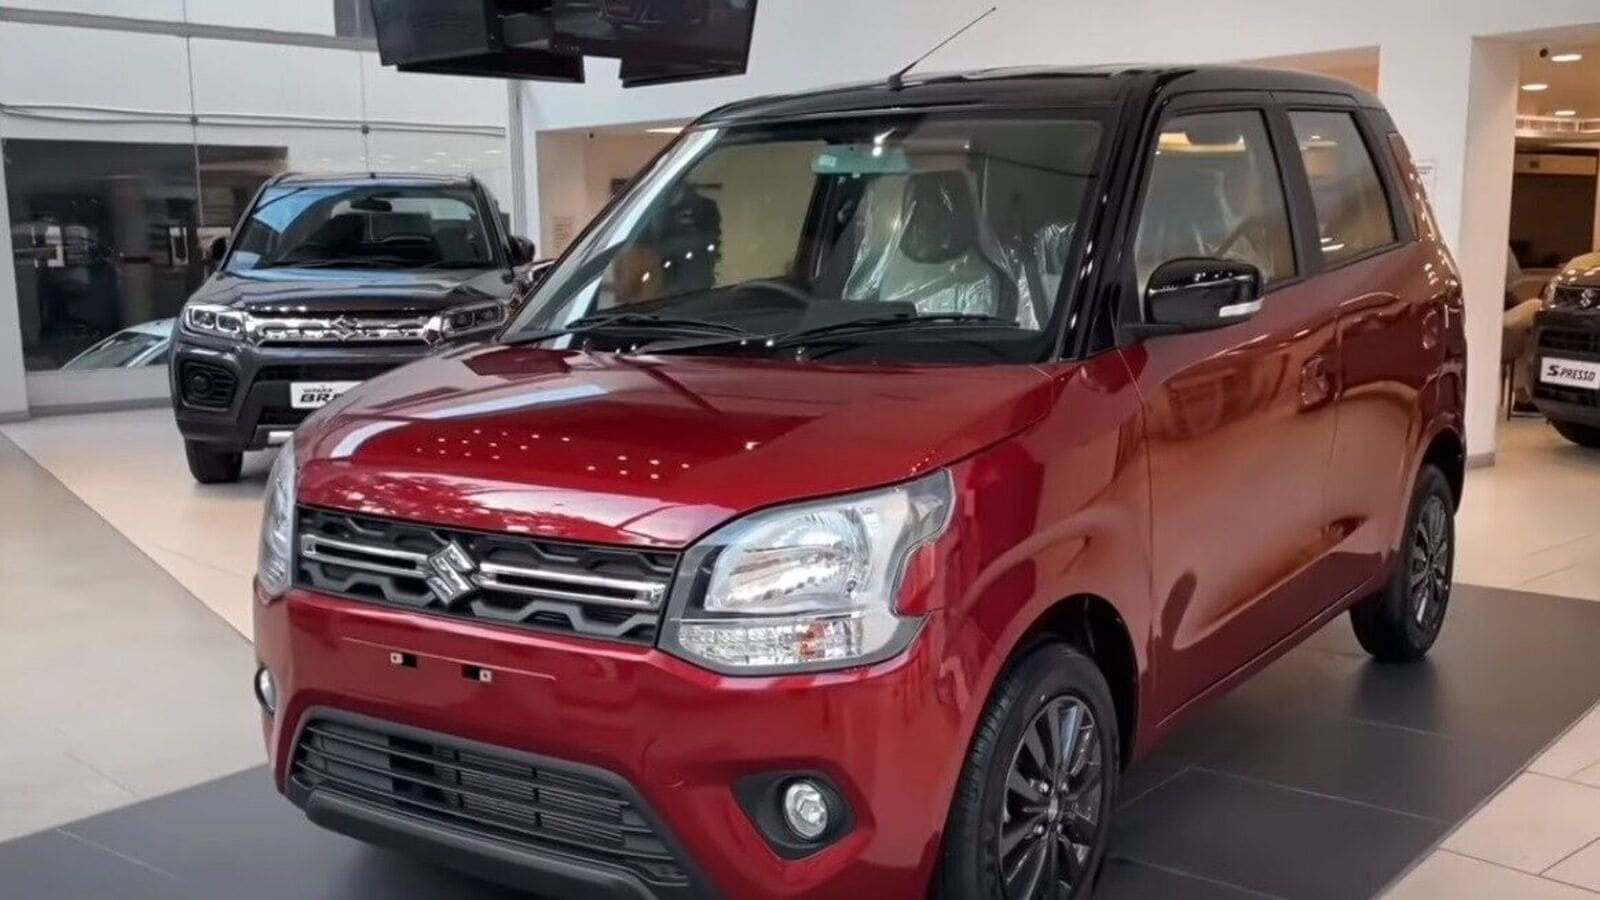 Maruti Suzuki Wagon R facelift arrives in dealerships HT Auto